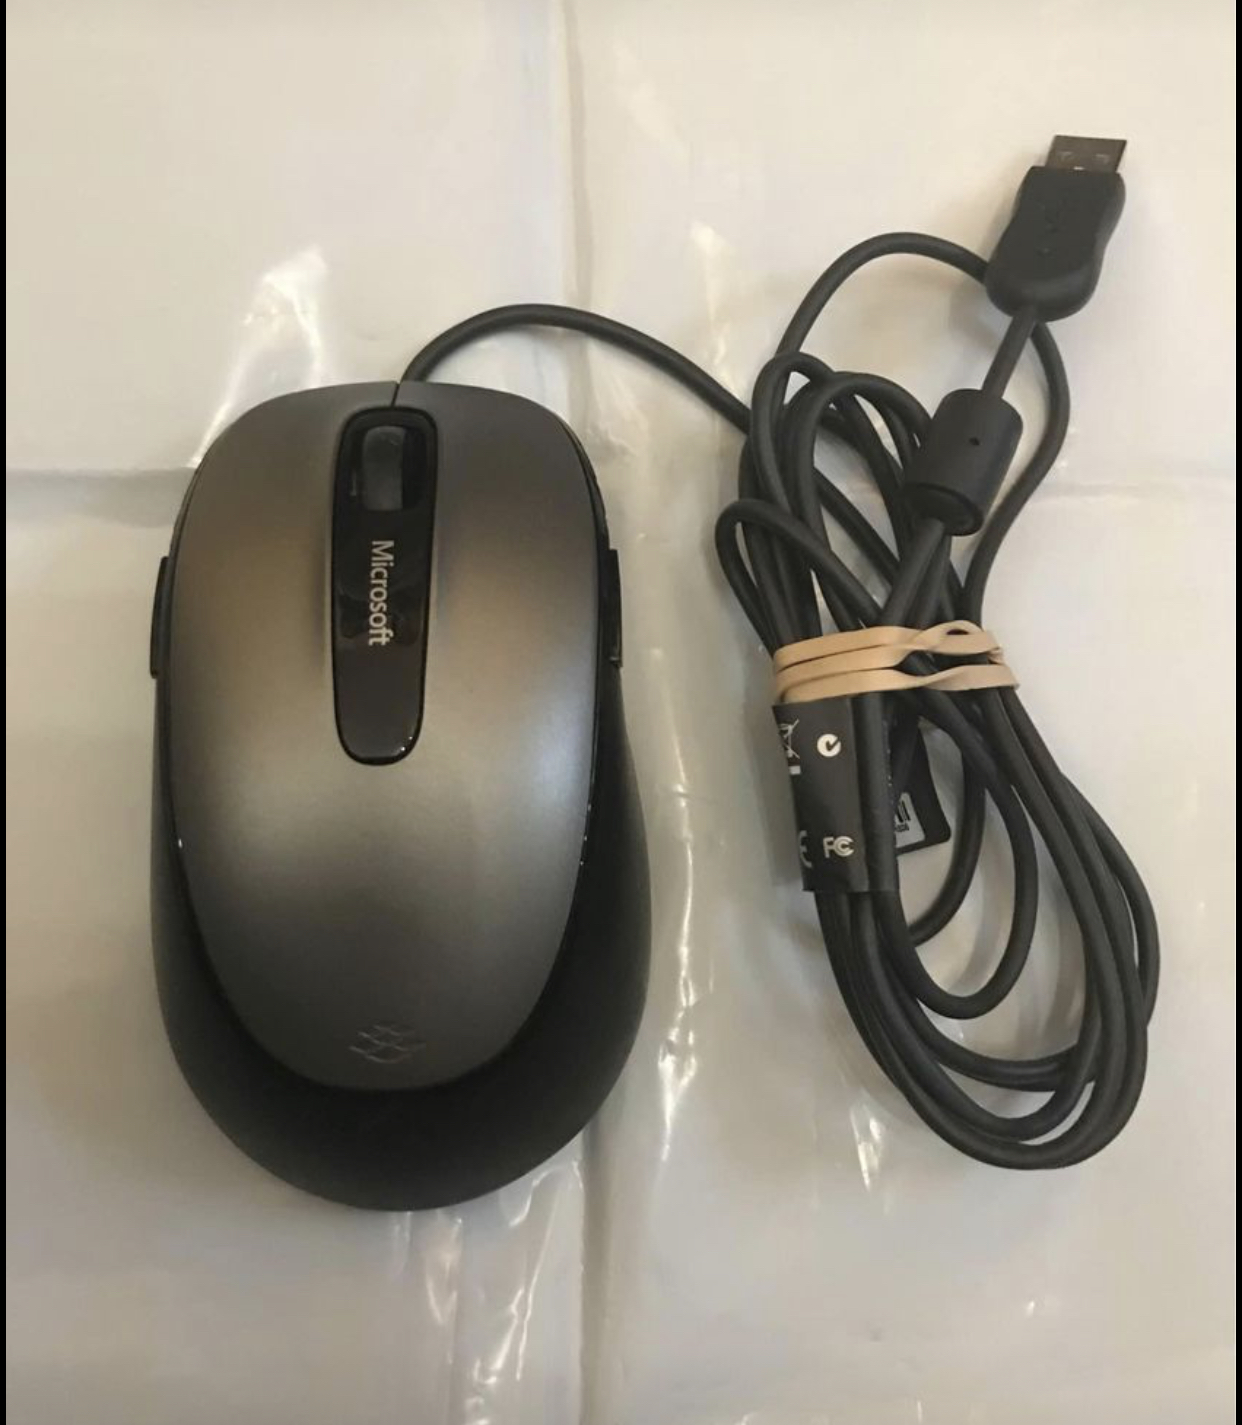 Microsoft comfort mouse